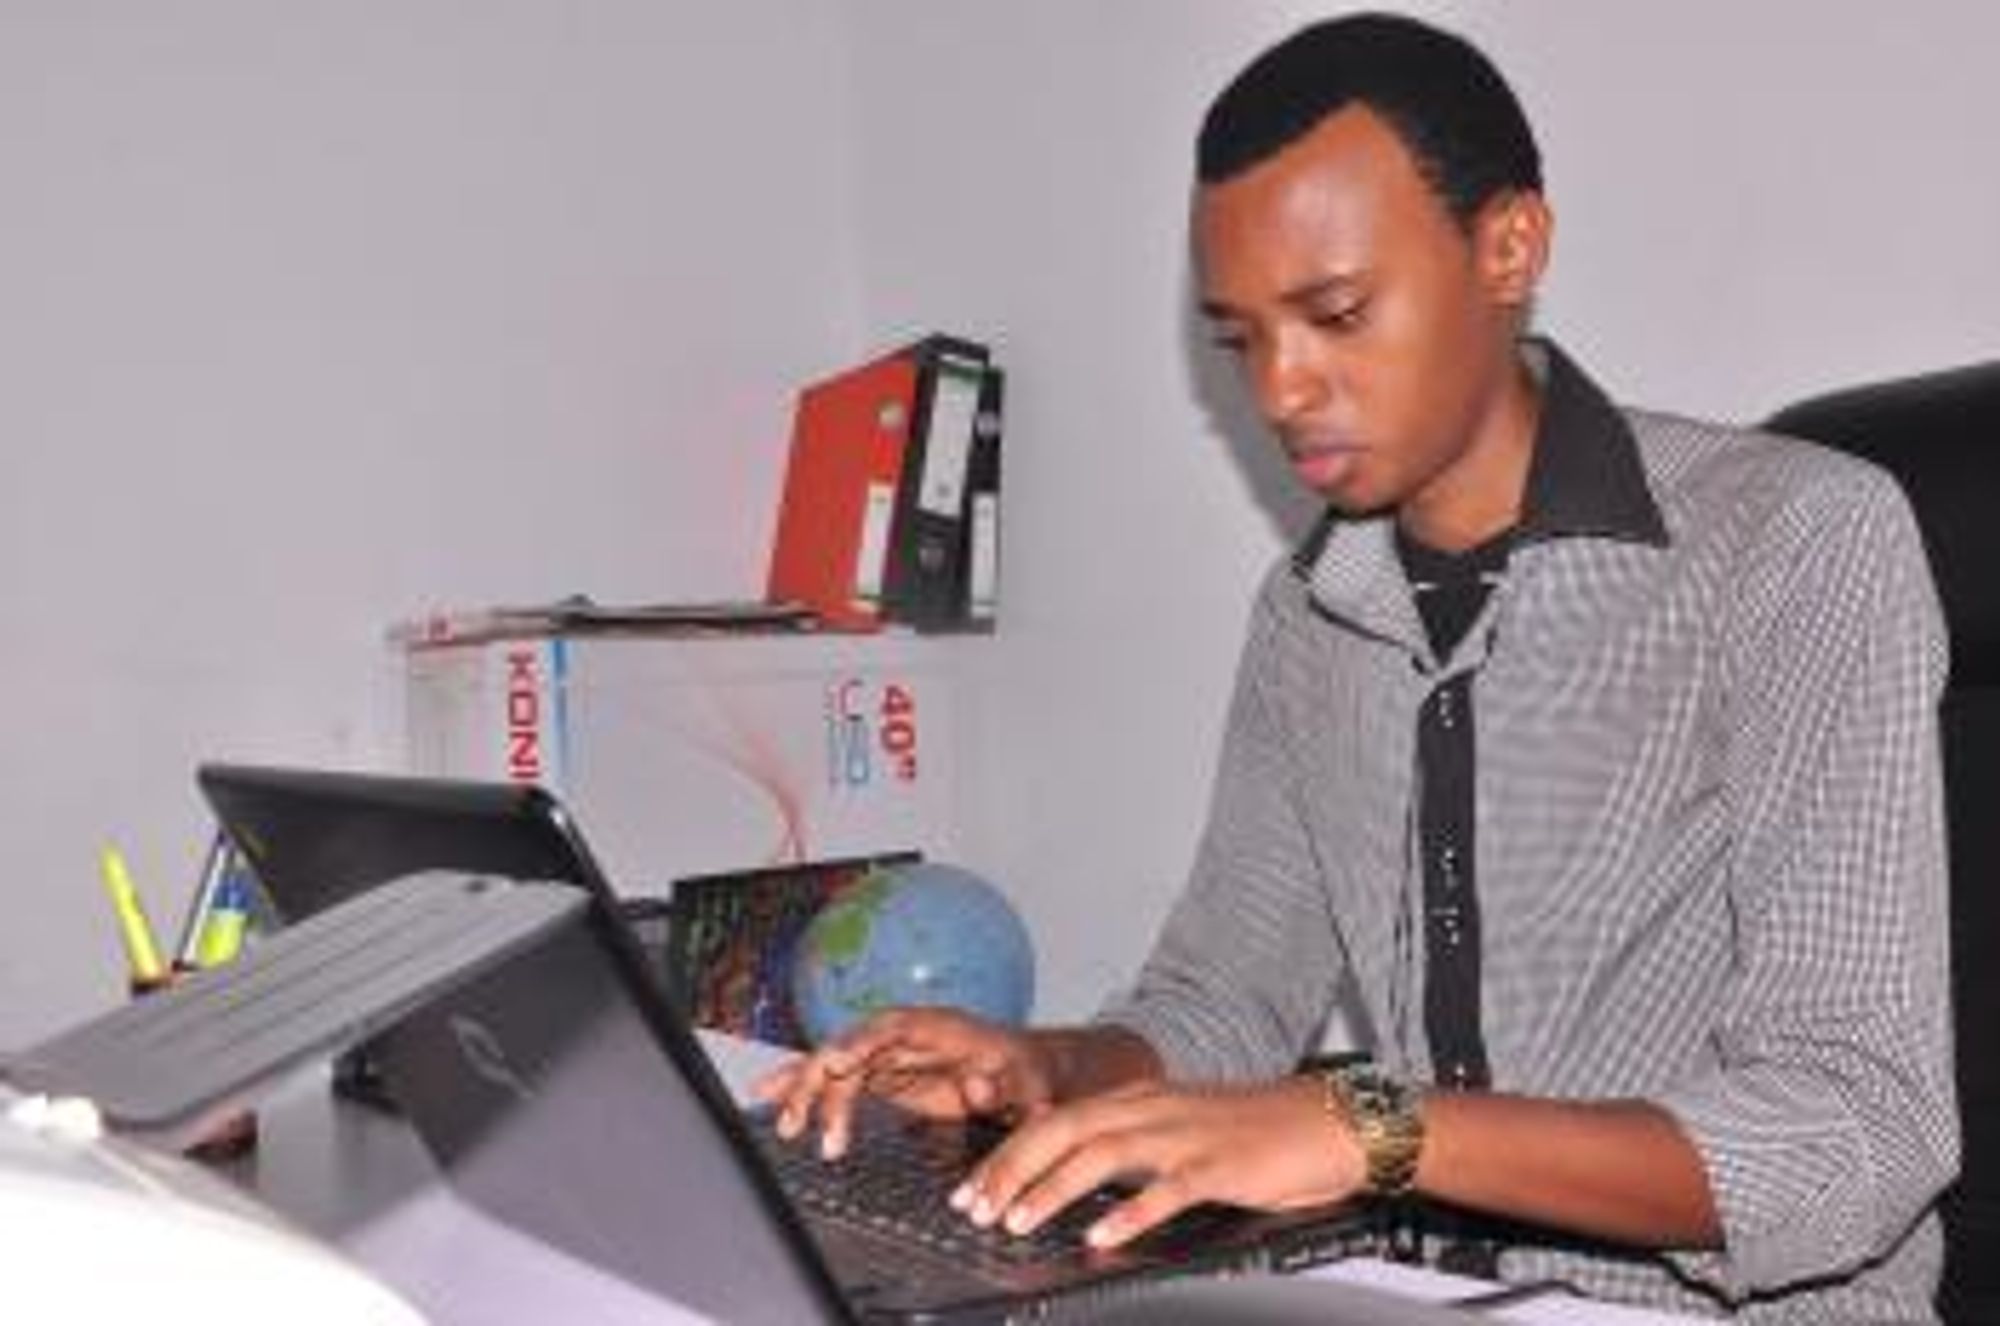 Alain var 14 år da han startet sin lille IT-bedrift. Foto: Ms Rose Lyadede.